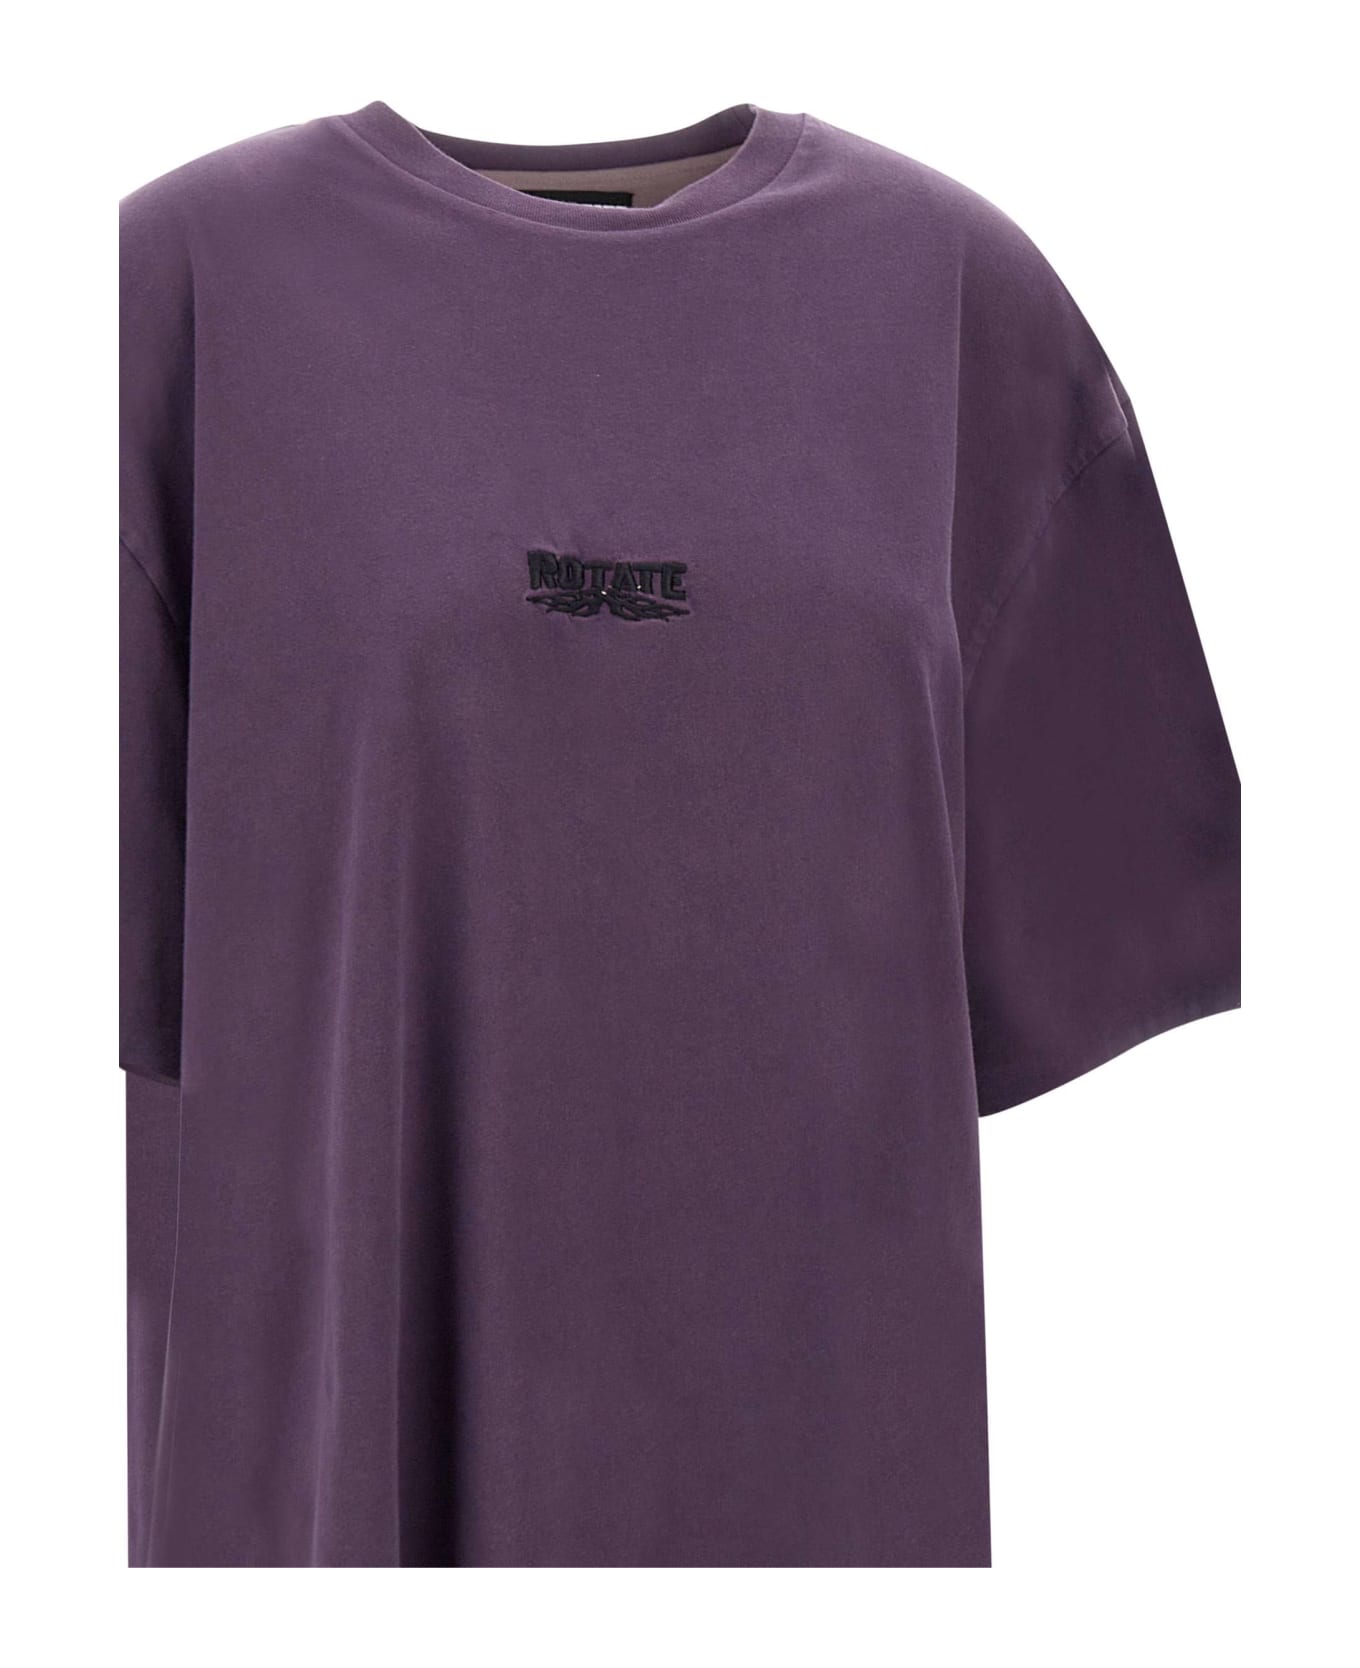 Rotate by Birger Christensen "enzyme" Cotton T-shirt - PURPLE Tシャツ